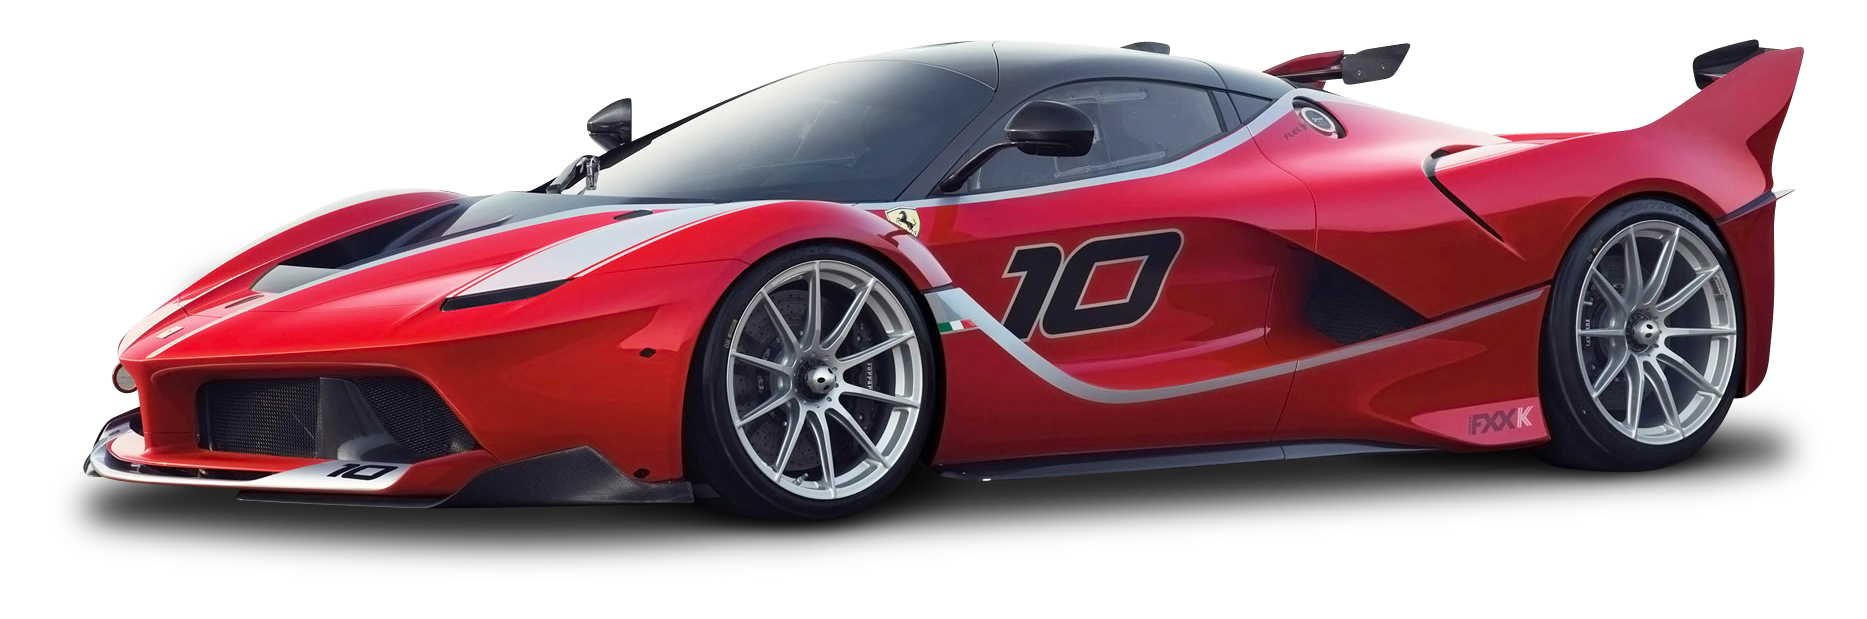 Imagen de Ferrari PNGn Transparente